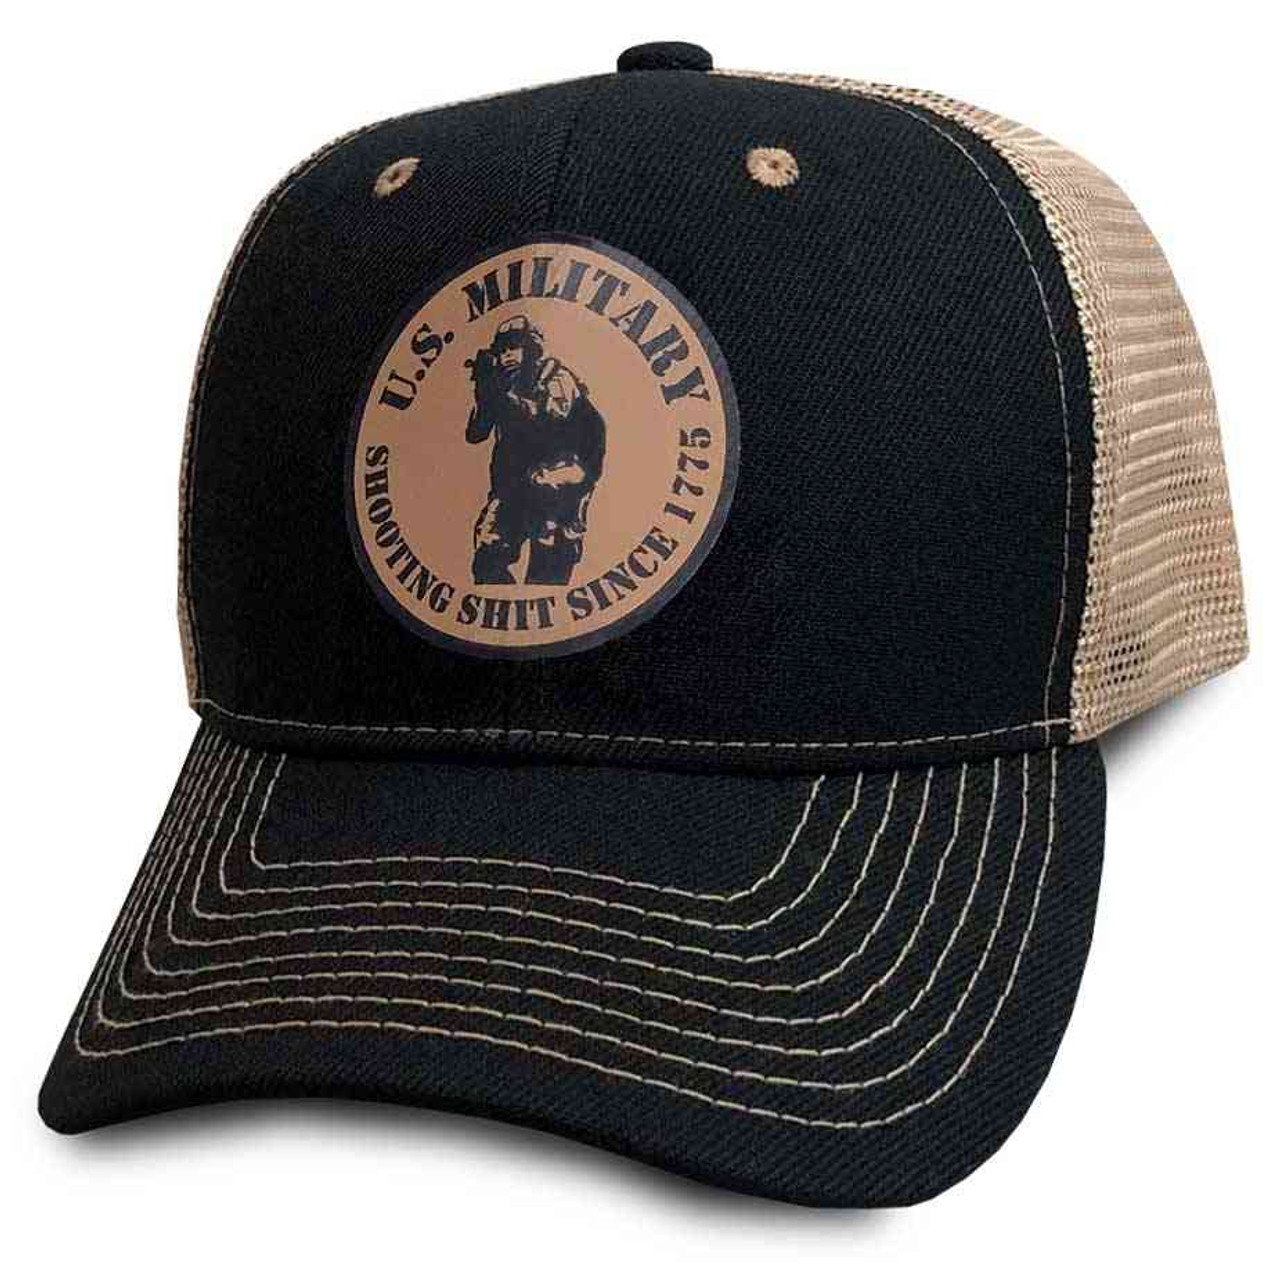 u s military hat shooting shit since 1775 vinyl